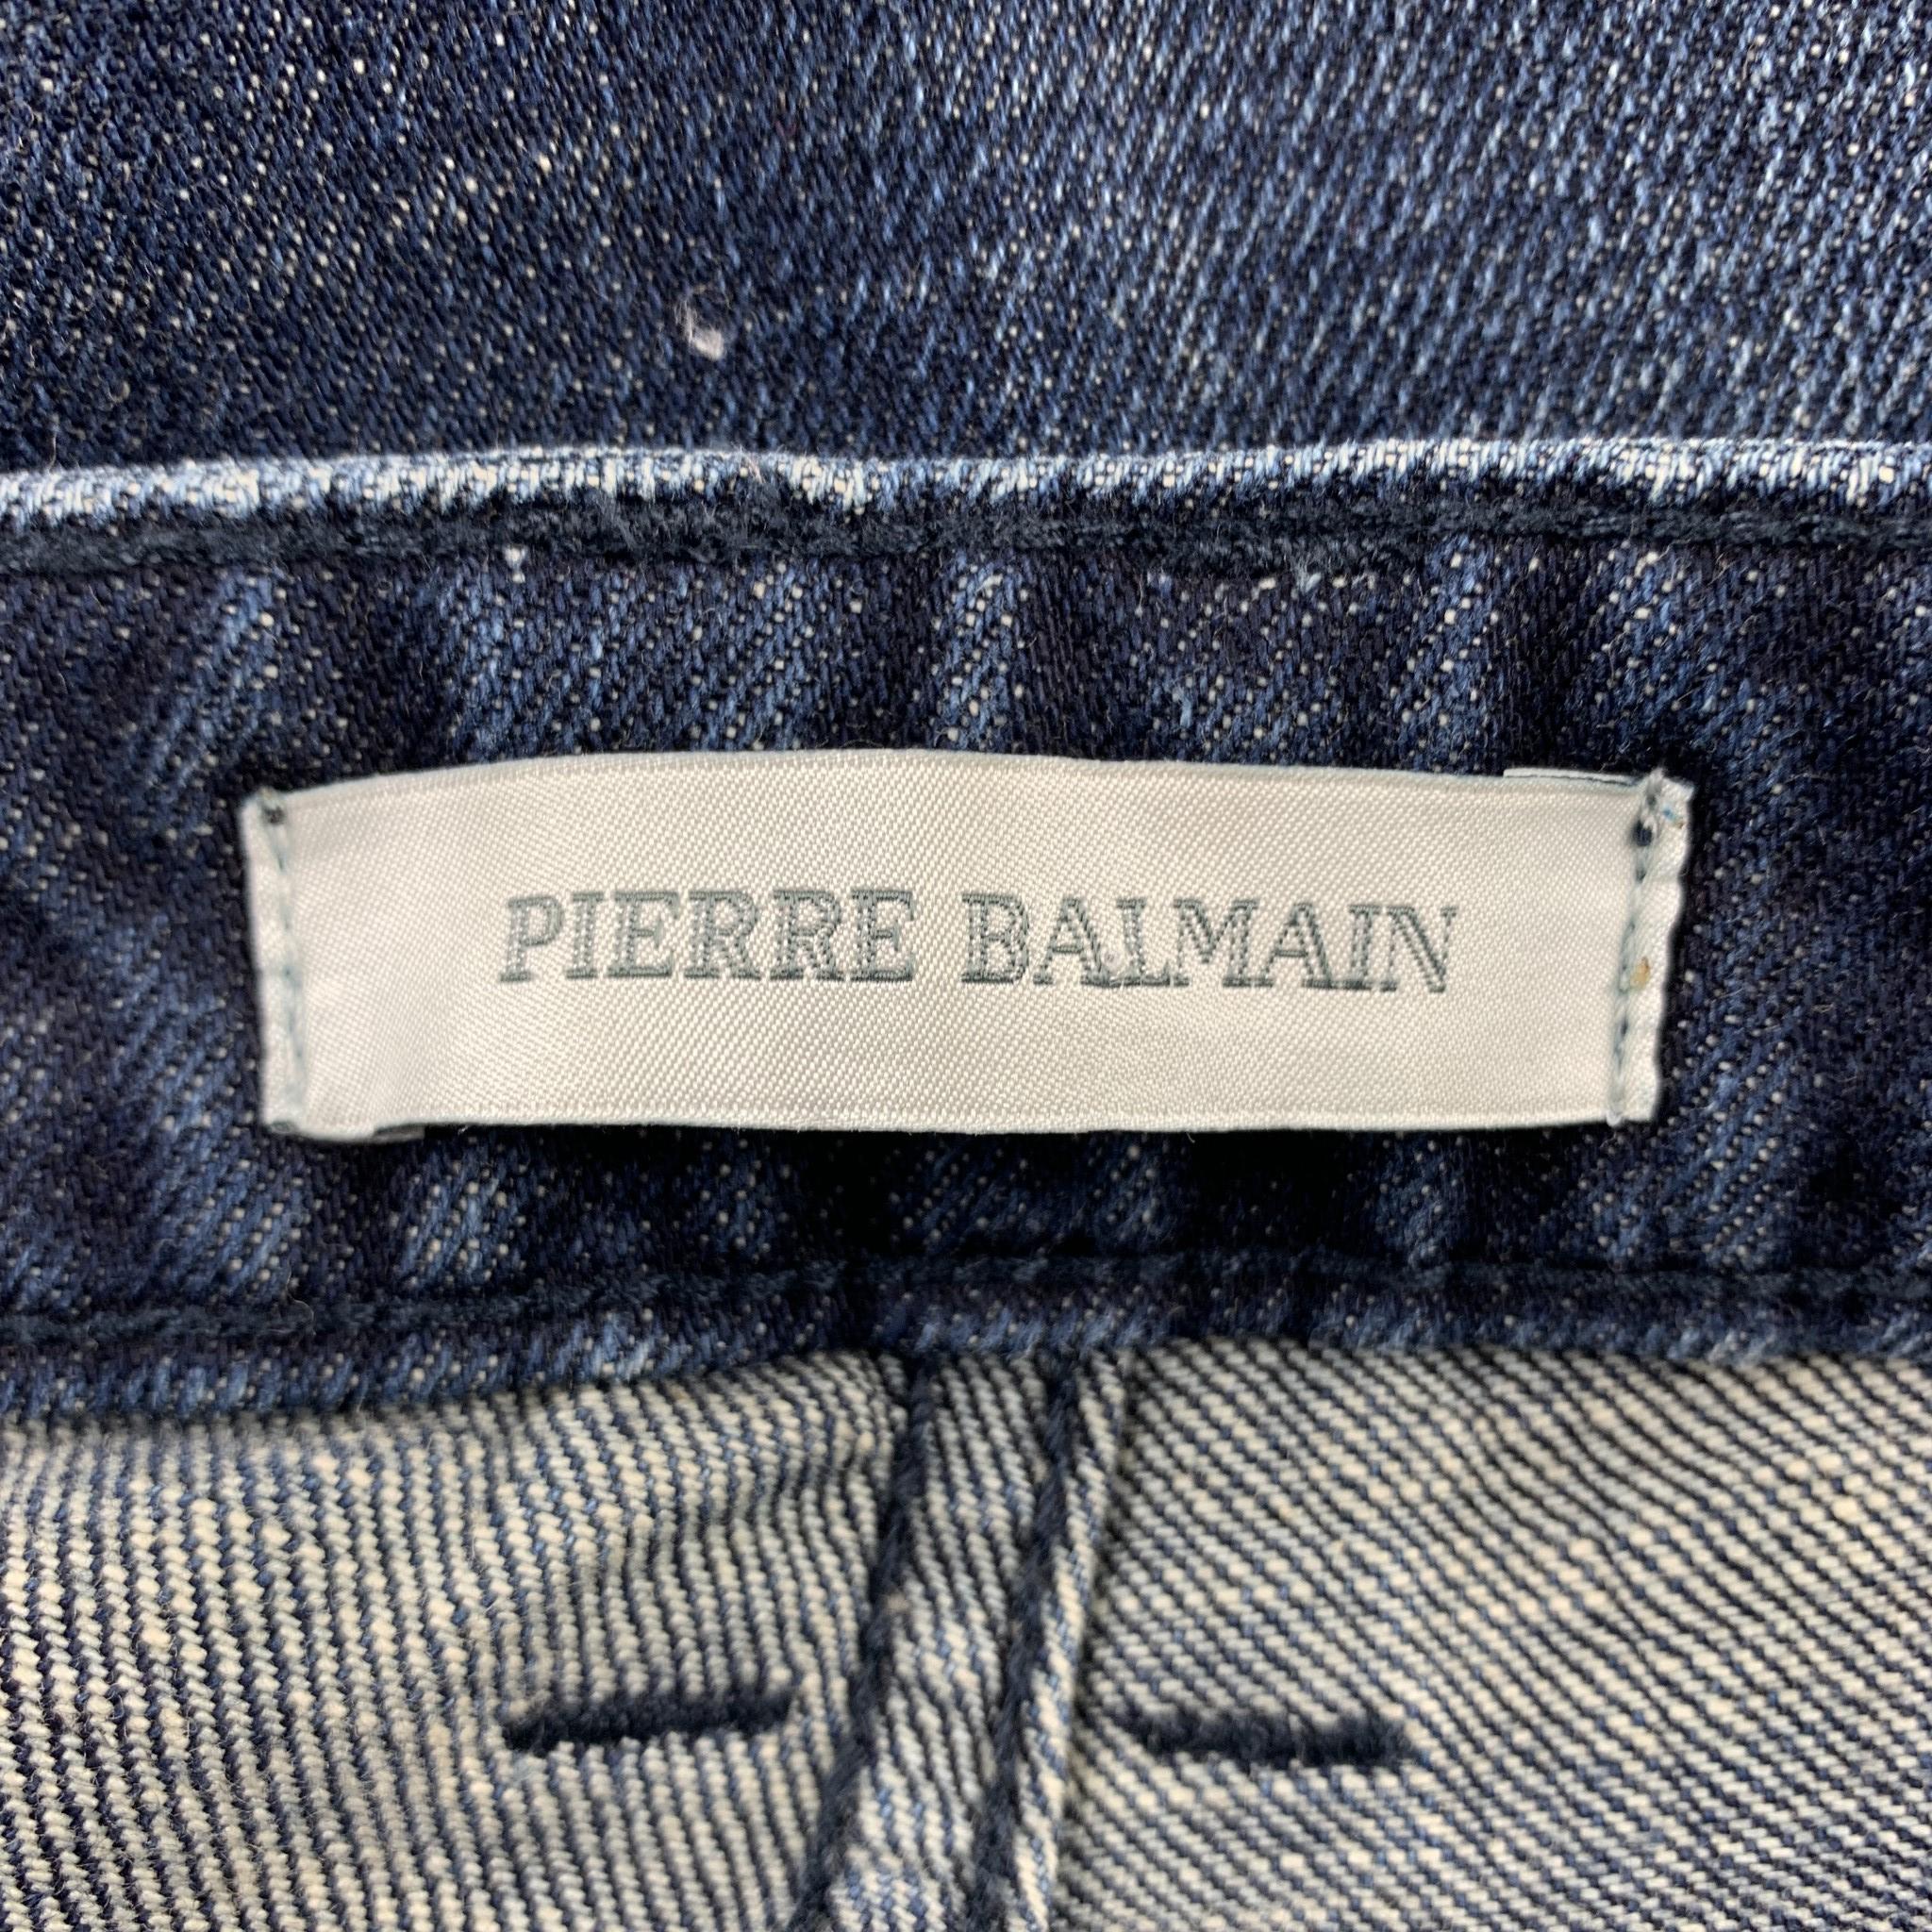 BALMAIN Size 30 Indigo Distressed Denim Zip Fly Jeans 1stDibs | 30 000 balmain jeans, pierre balmain jeans, 30 thousand dollar balmain jeans